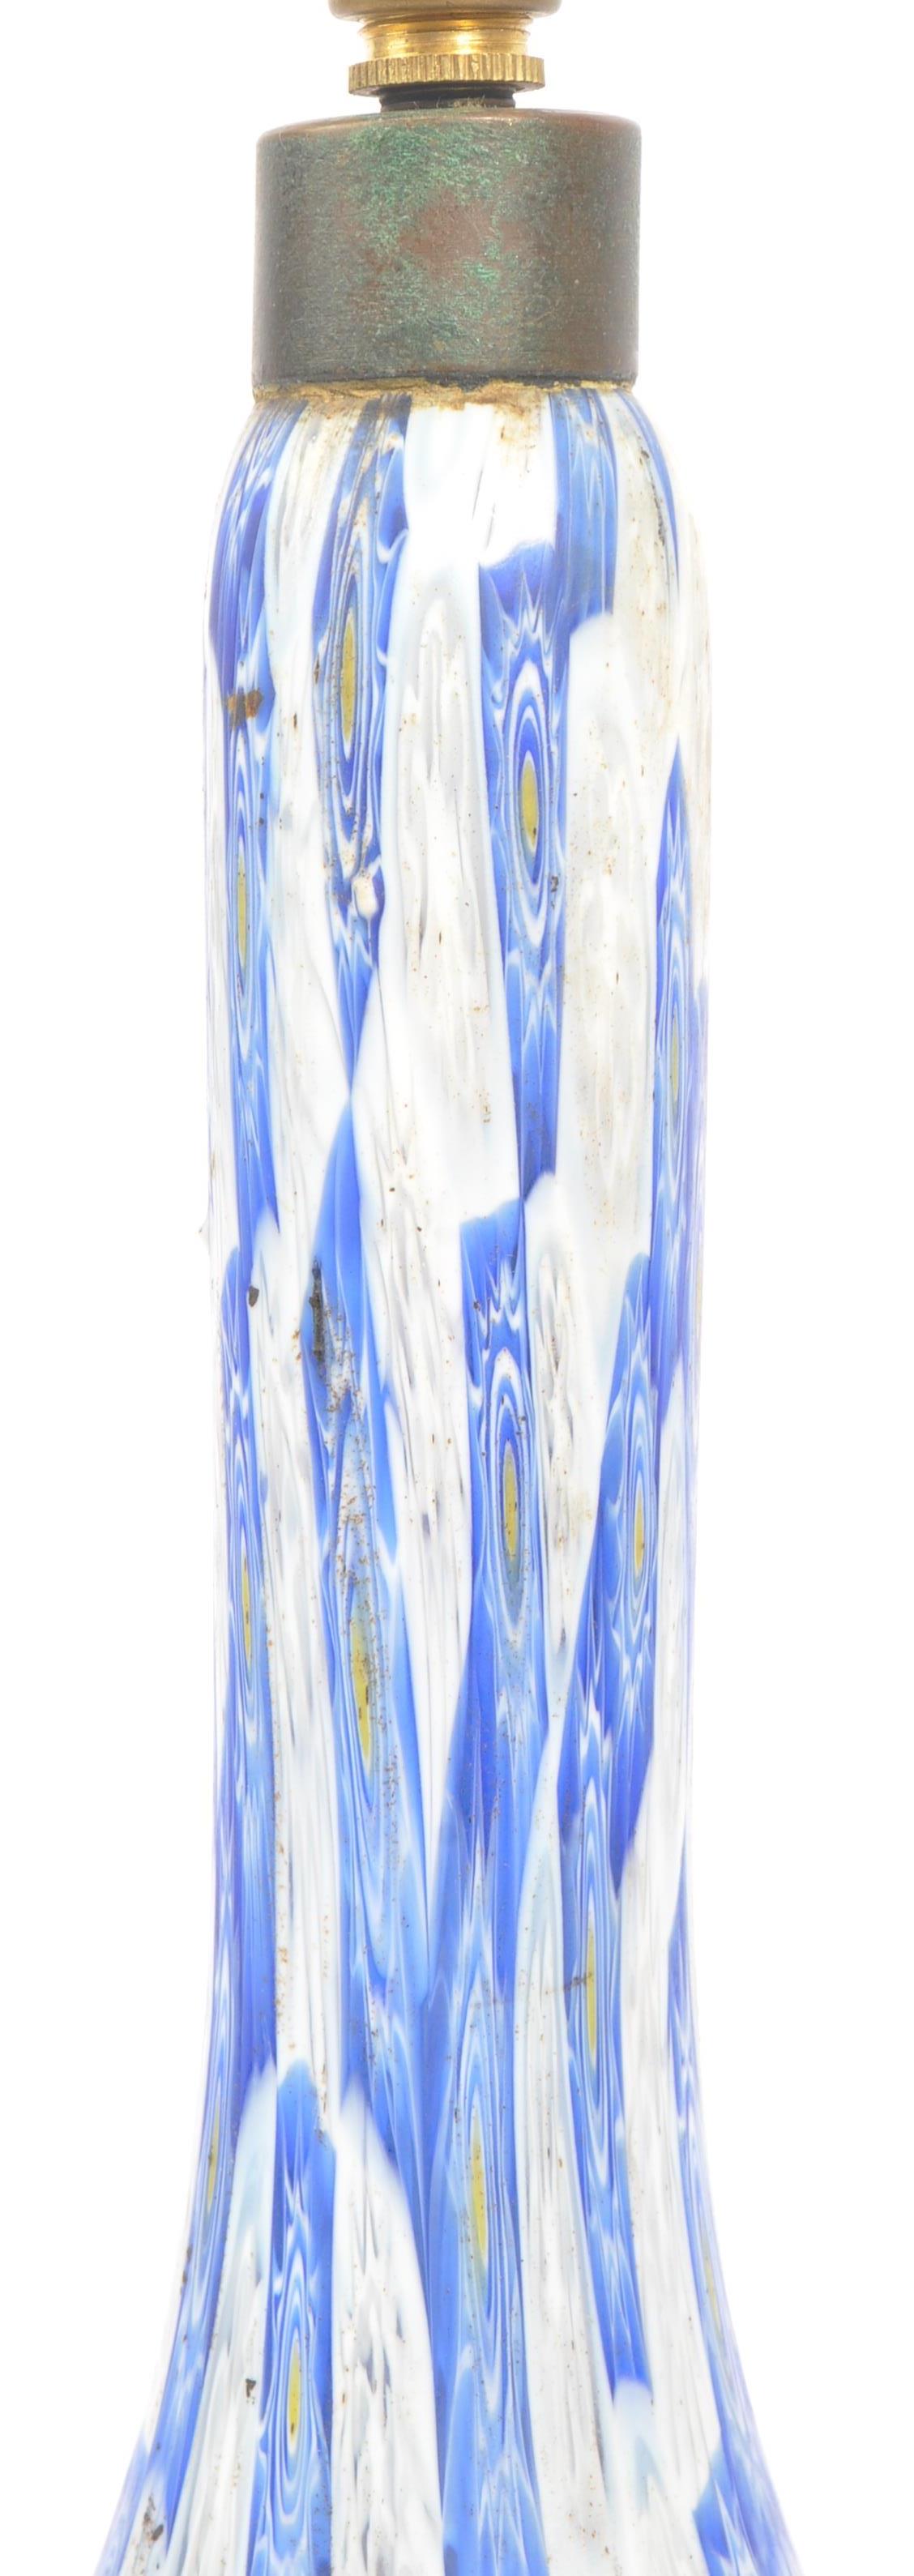 MURANO MANNER ART GLASS MILLEFIORI TABLE LAMP - Image 6 of 7